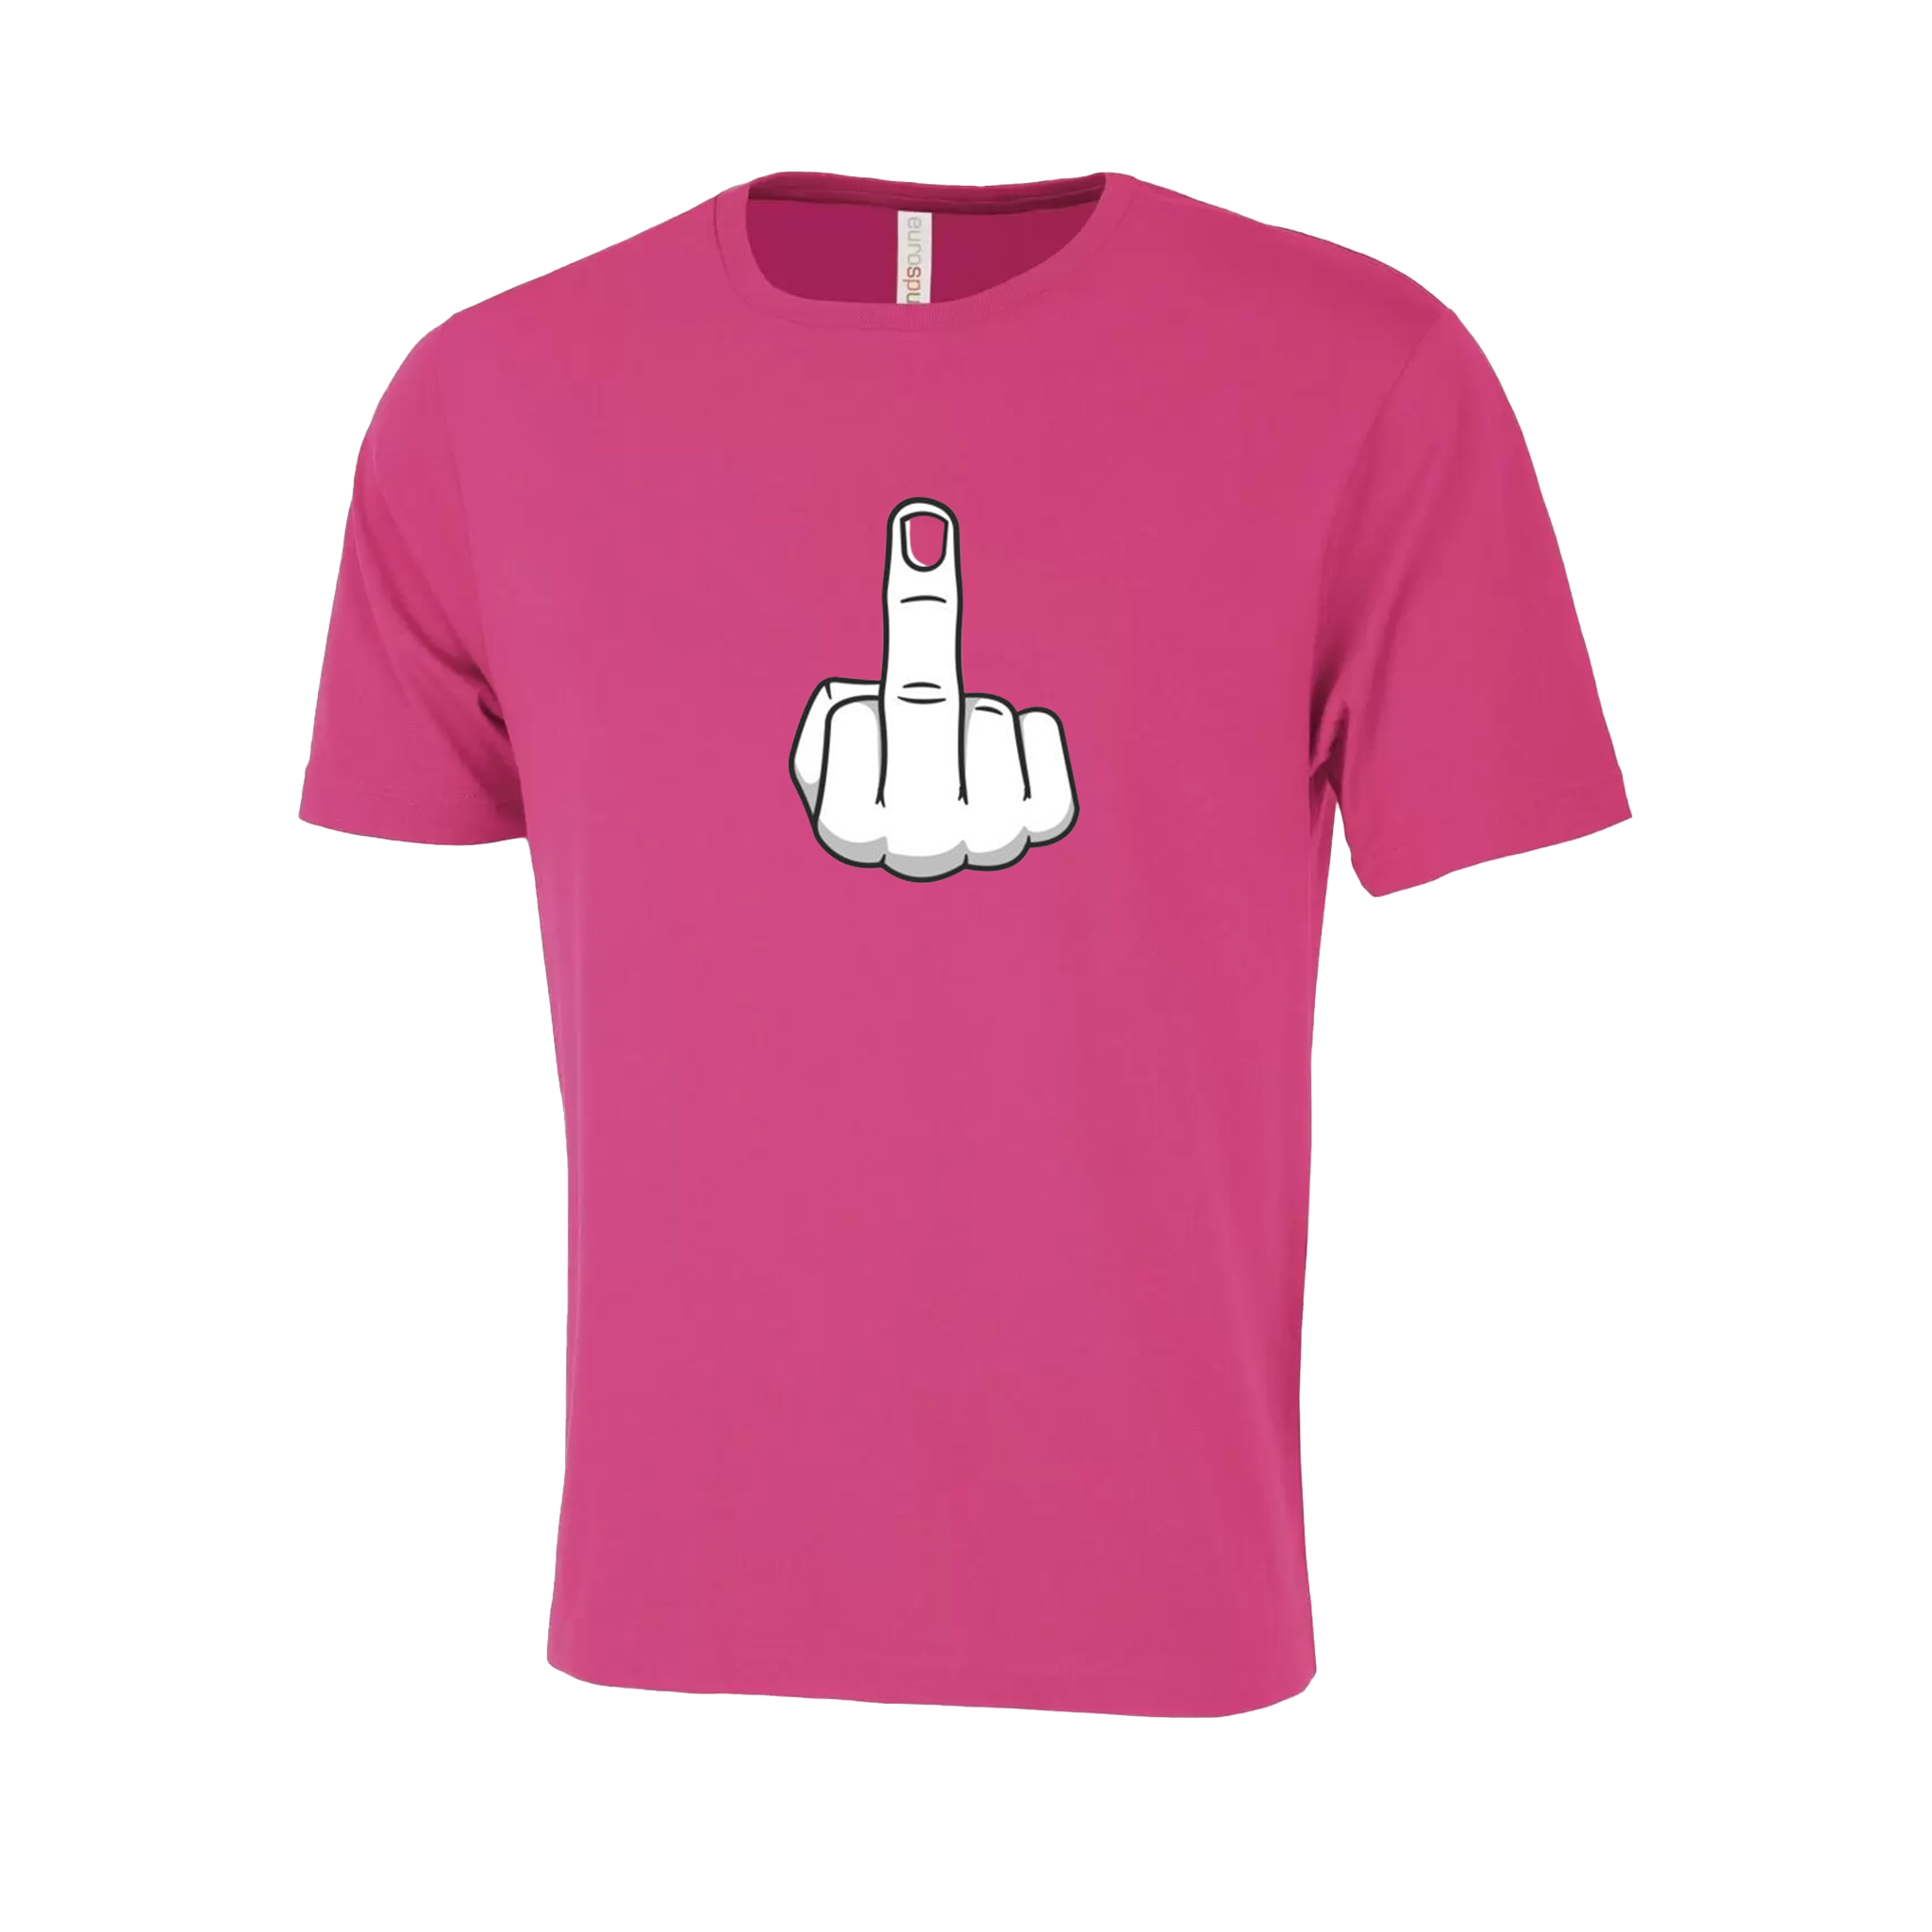 Flip Off Novelty T-Shirt - Adult Unisex Sizing XS-4XL - Pink